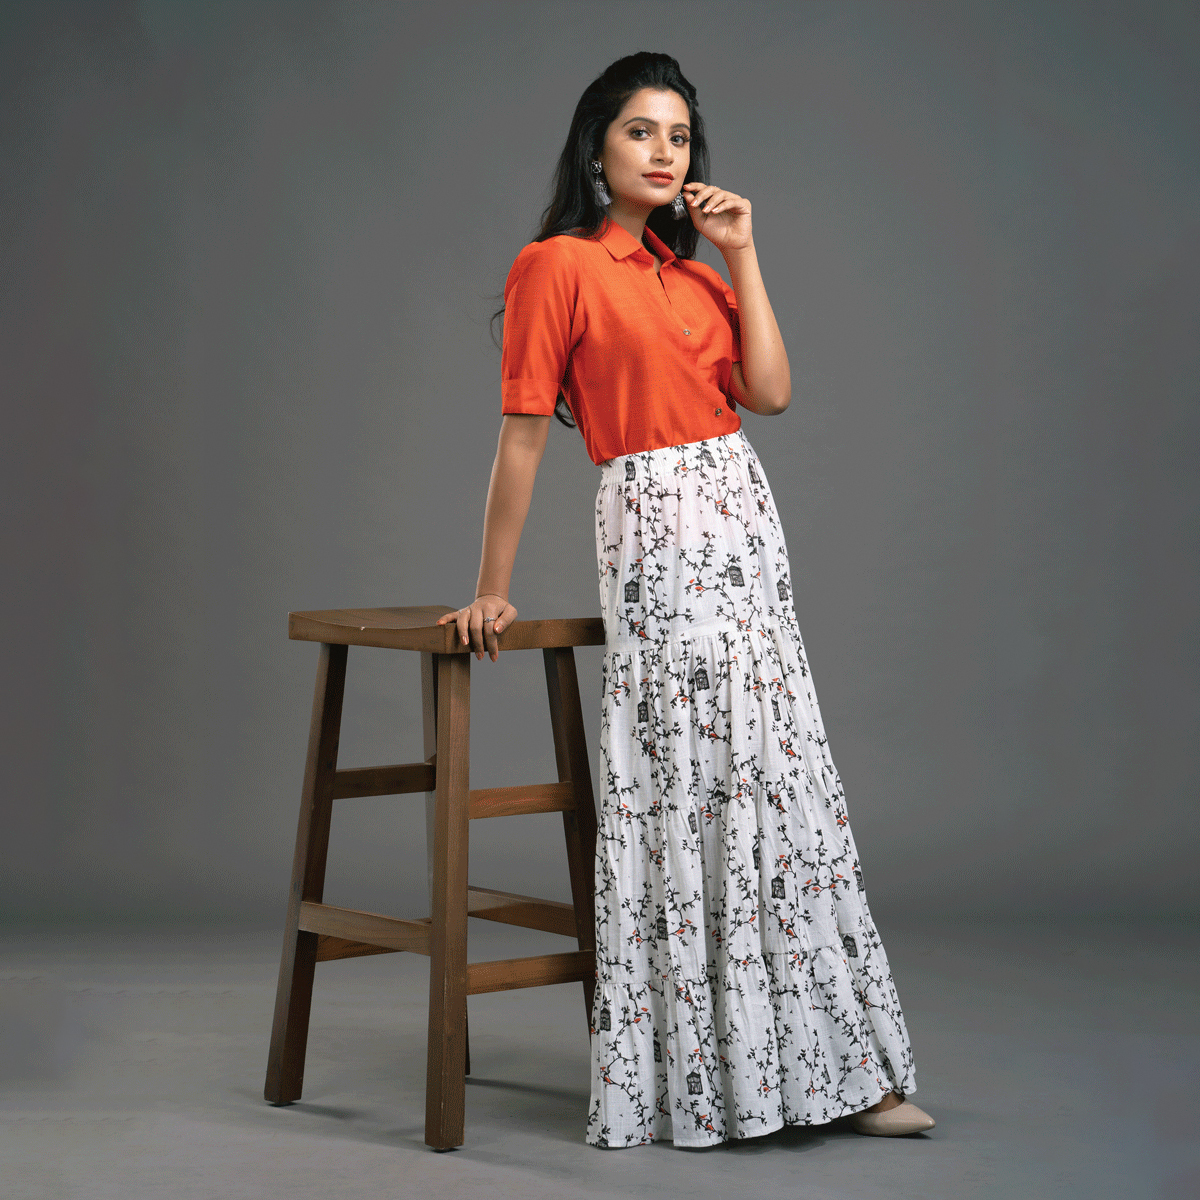 Zella Solid Color Cotton Silk Elbow Sleeve Shirt & Cotton Printed Tyre Skirt Set - Orange & White